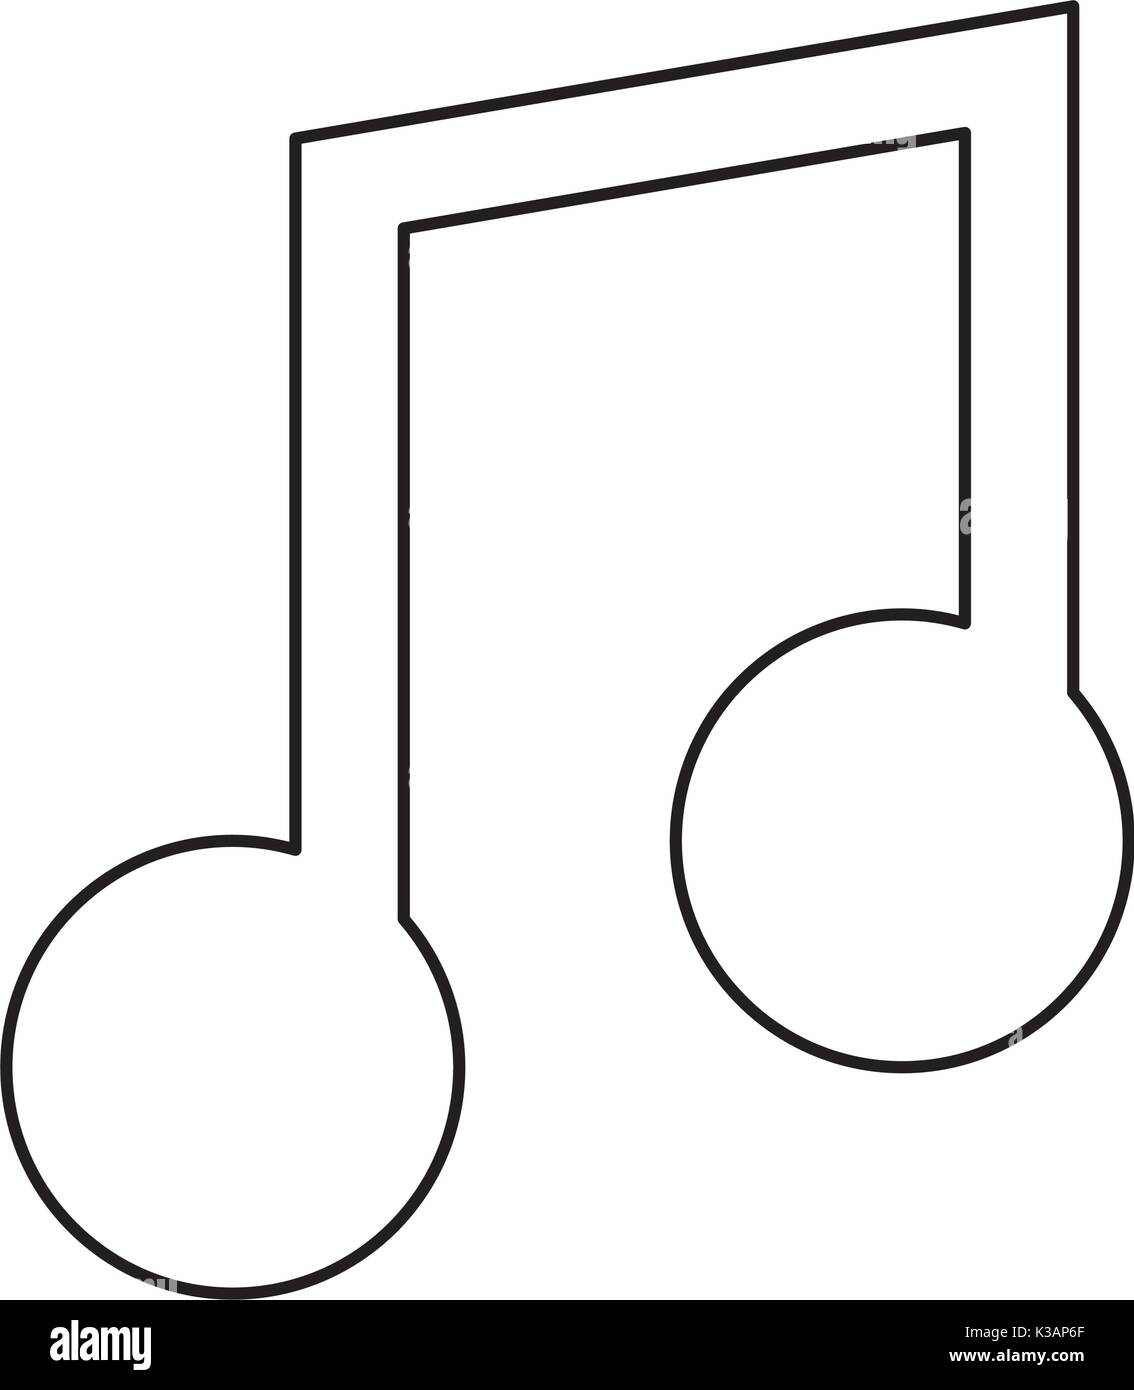 music note vector illustration Stock Vector Image & Art - Alamy